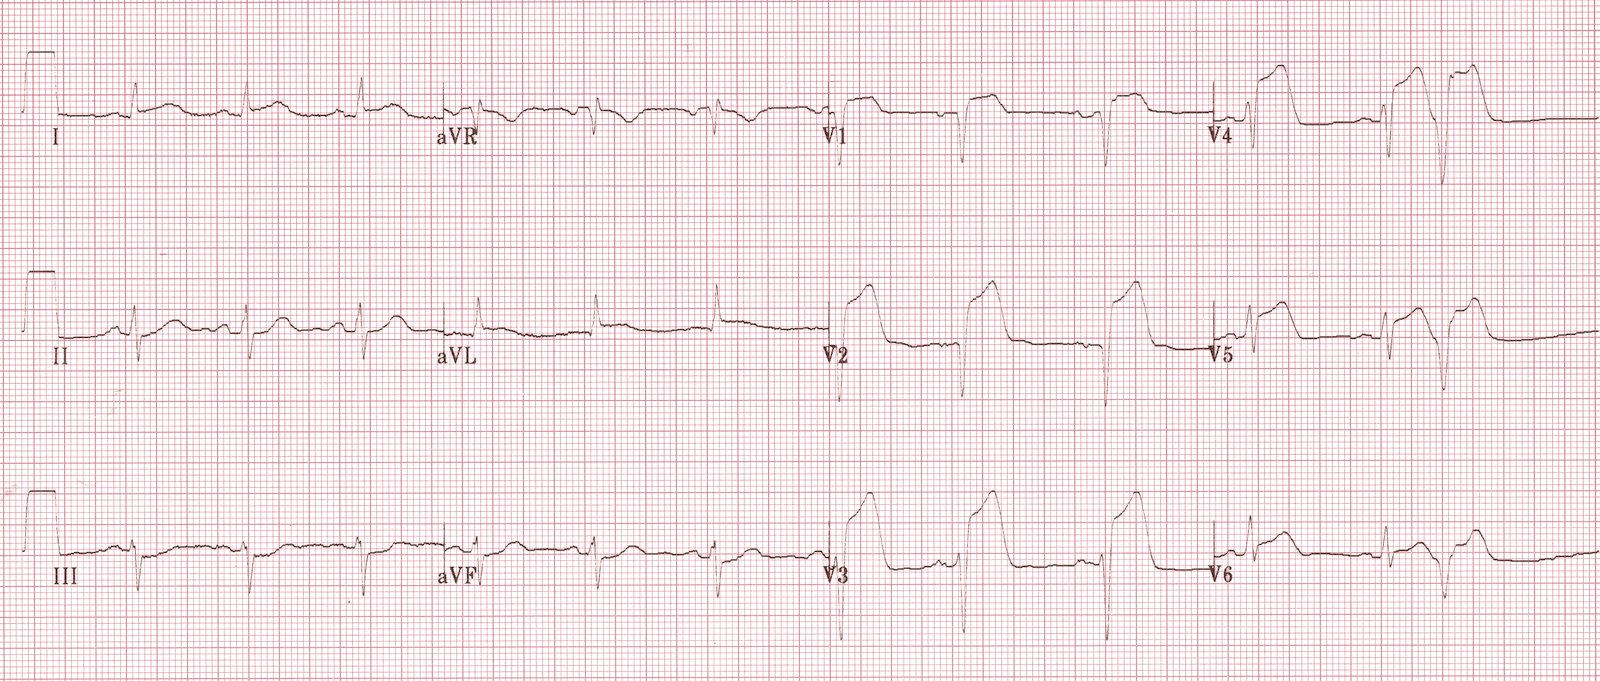 ЭКГ при распространенном инфаркте миокарда левого желудочка с подъемом ST.